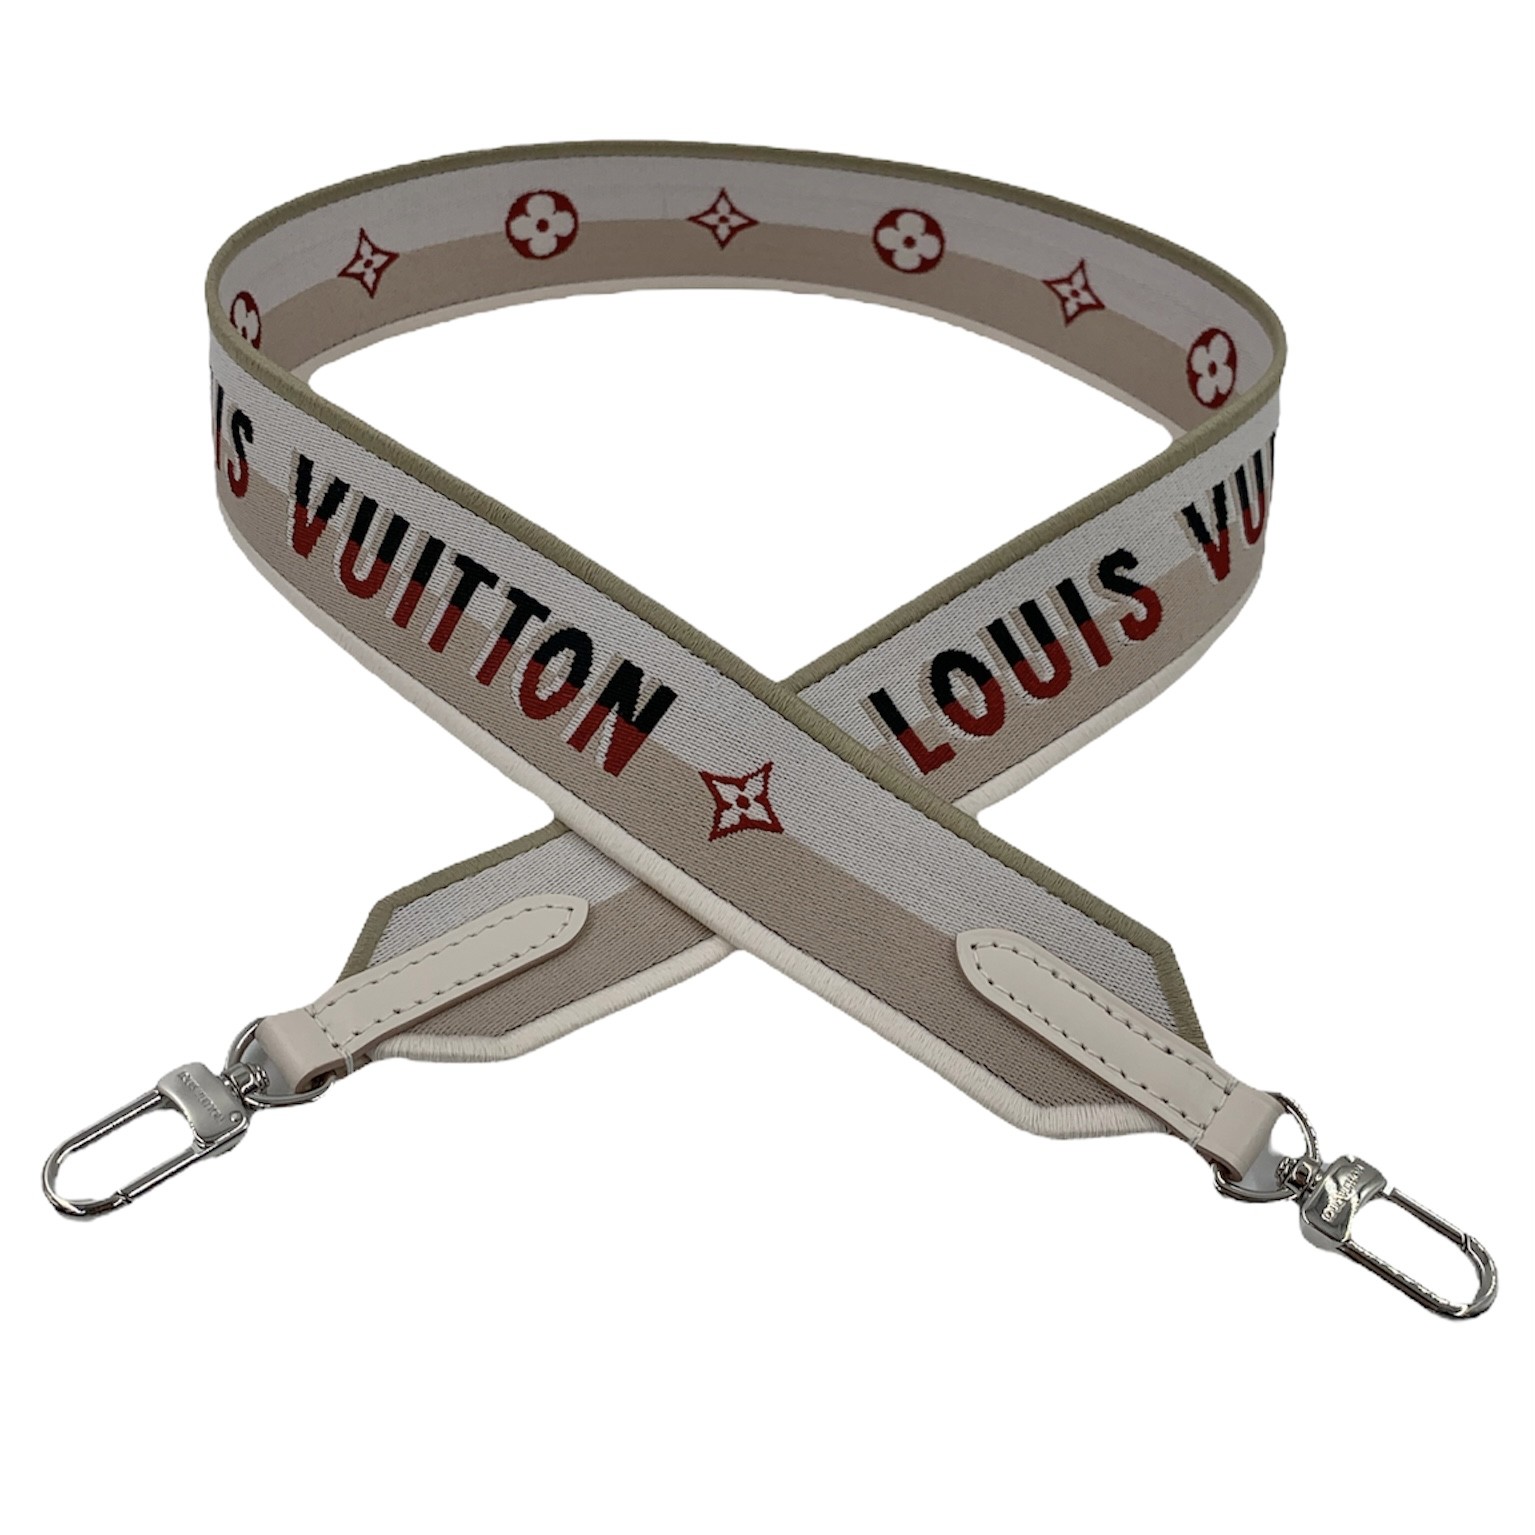 Basket Louis Vuitton - LuxeForYou